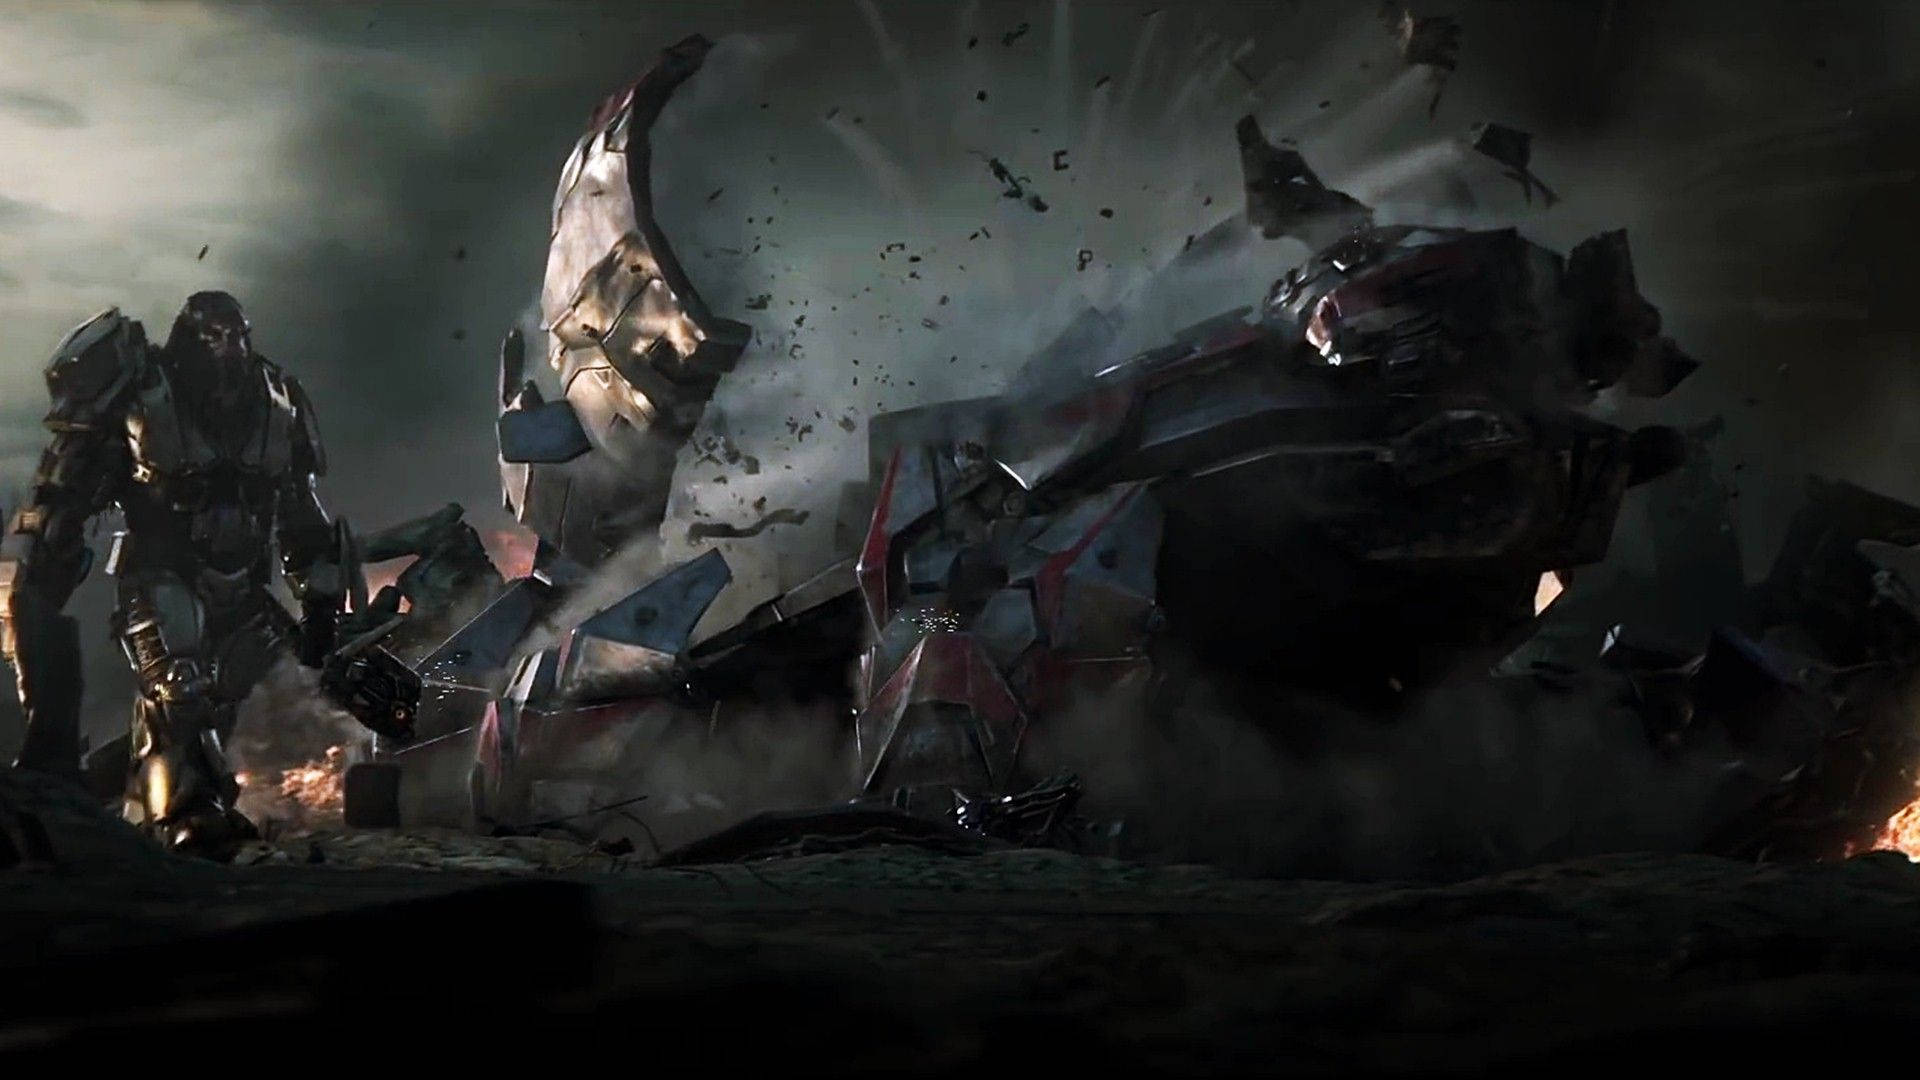 Jiralhanae Warlord Atriox Halo Wars 2 PS4 desktop wallpaper.